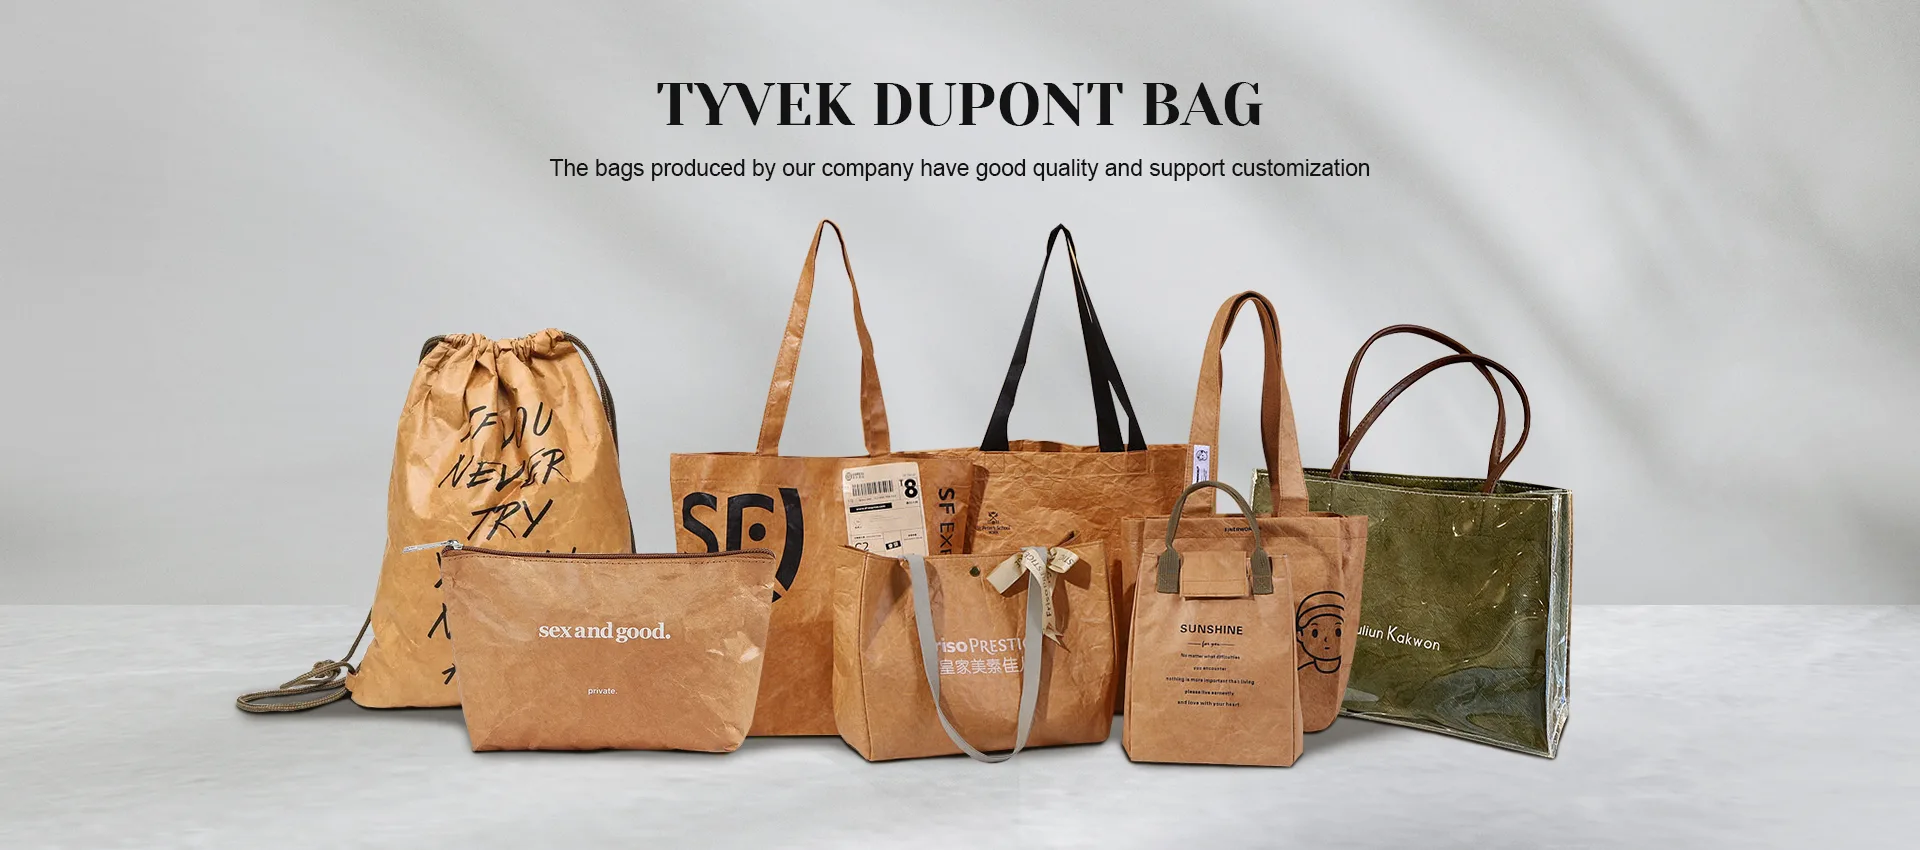 China Tyvek Dupont Bag Manufacturers